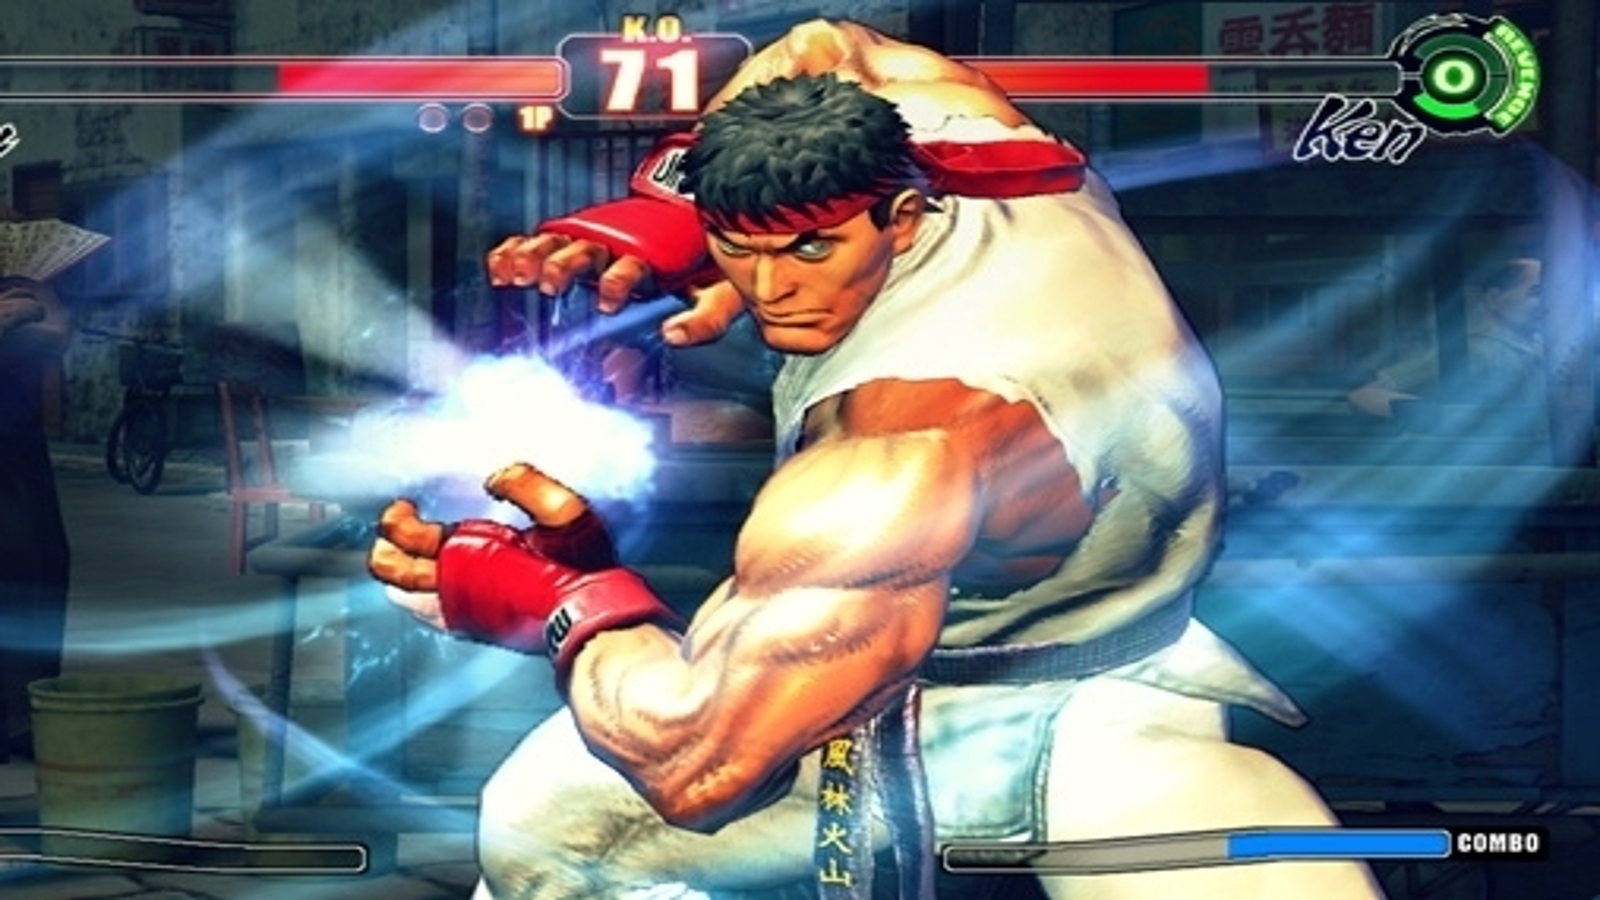 Super Street Fighter IV 4 Arcade Edition Xbox 360/ One Digital